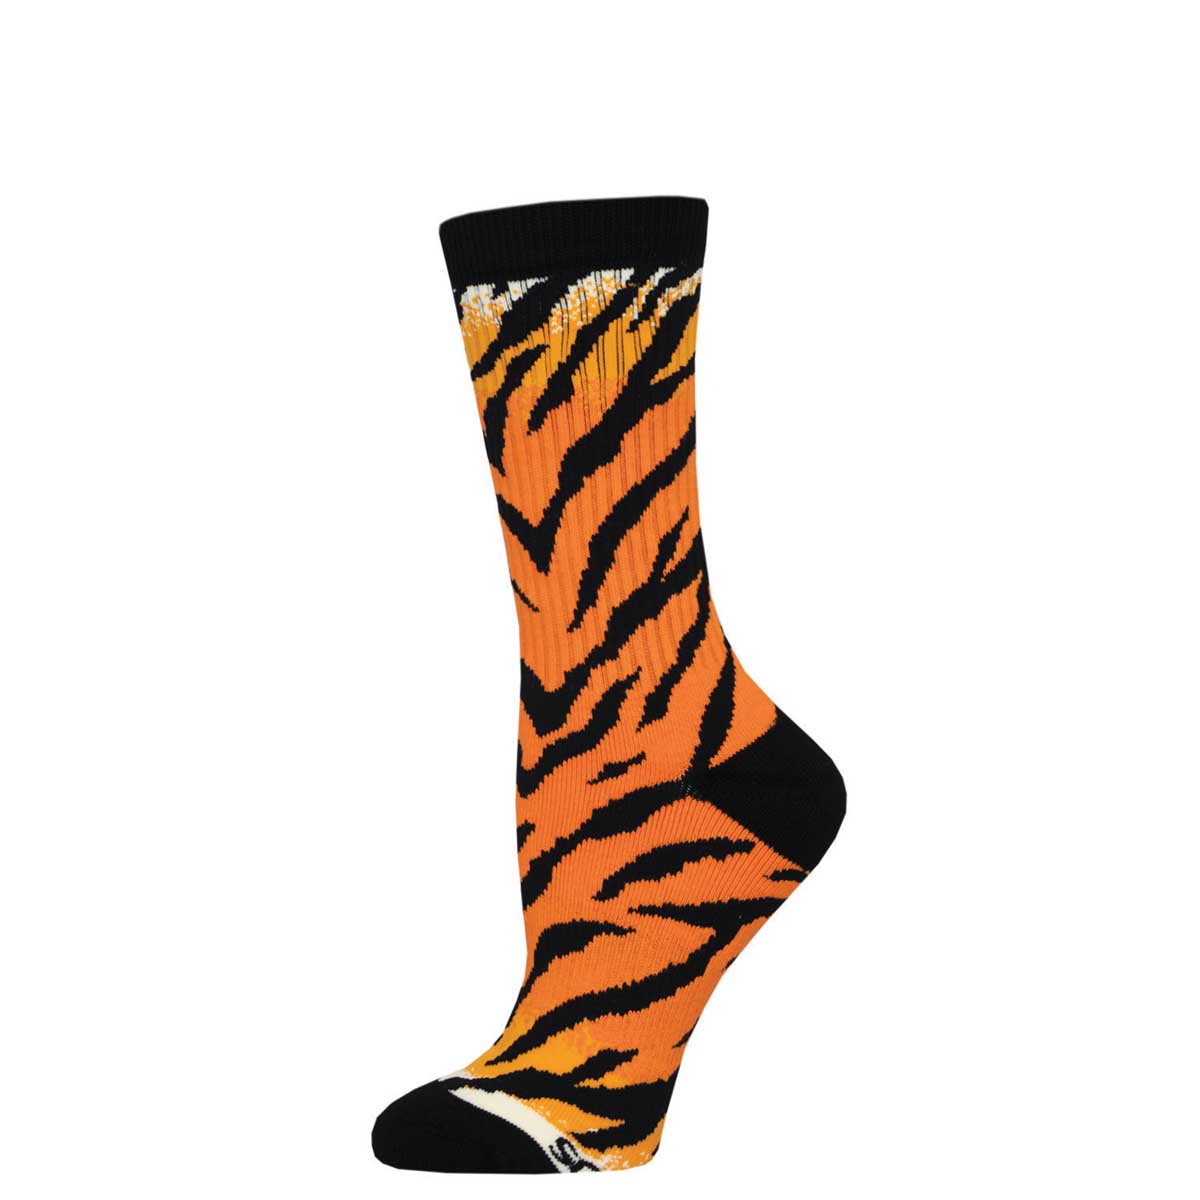 Socks - White/tiger - Men